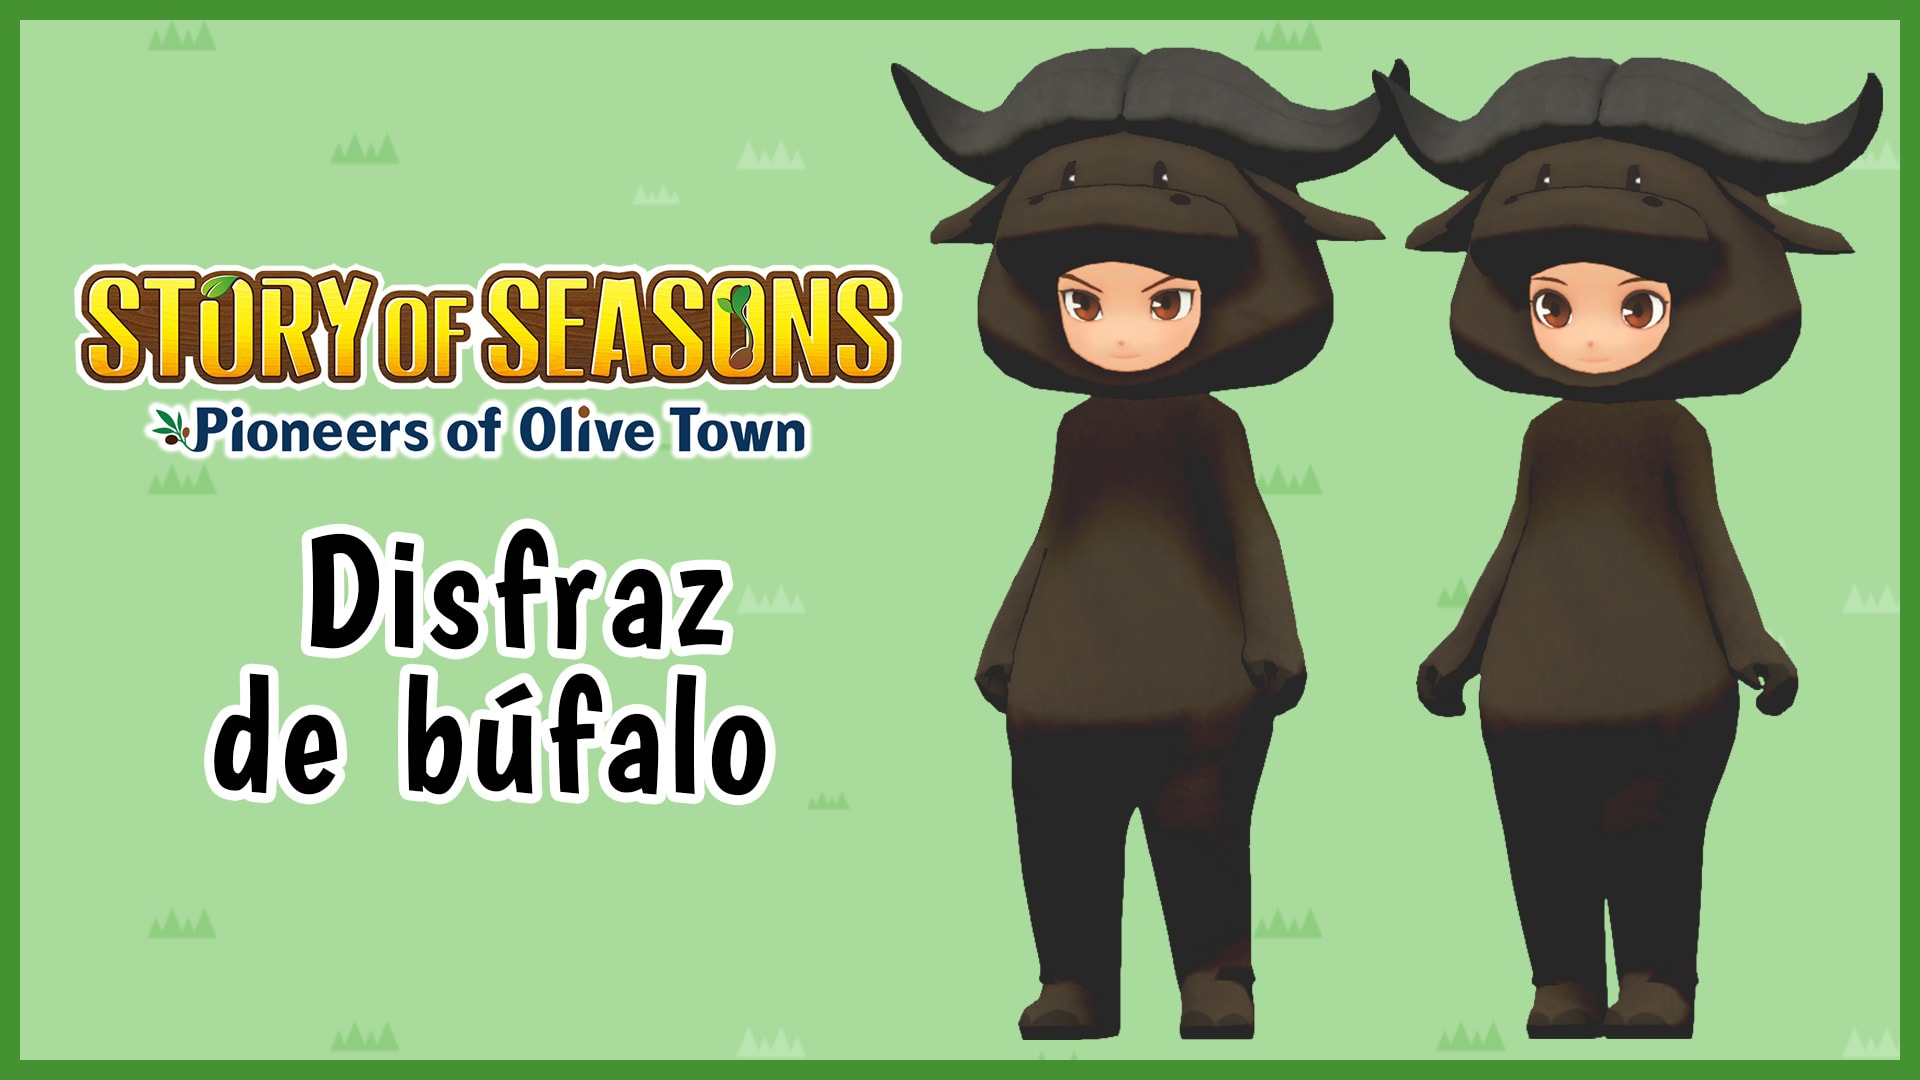 Buffalo Costume